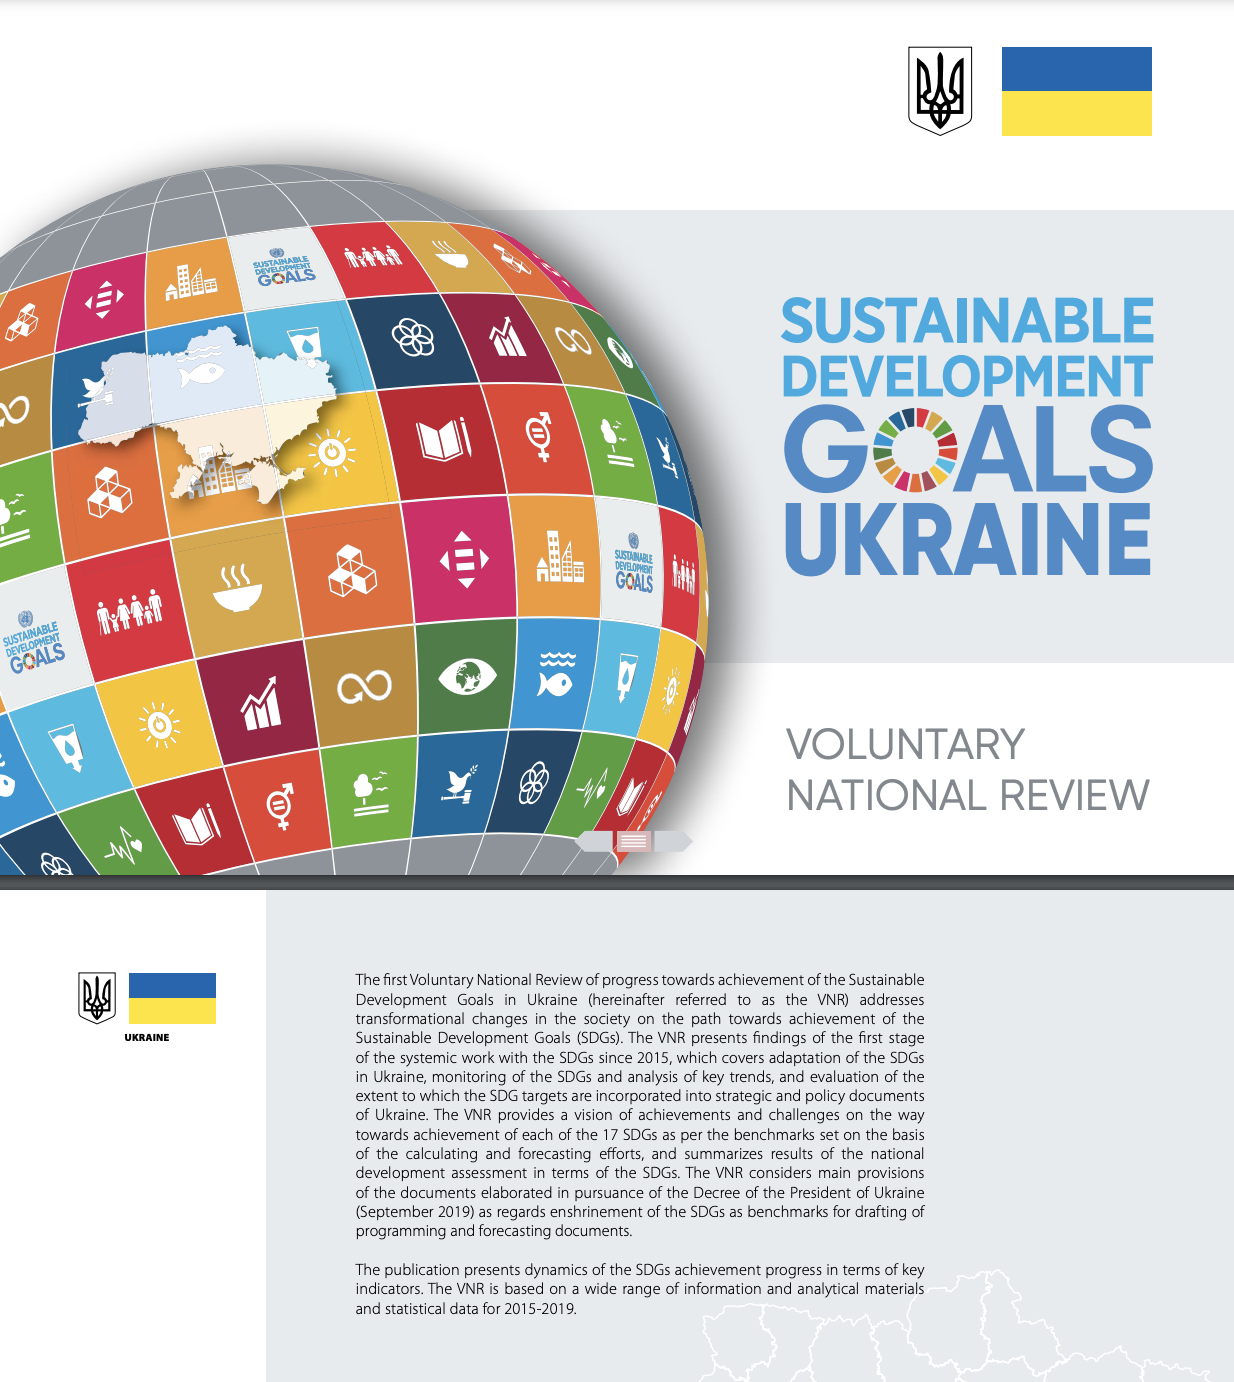 Sustainable Development Goals Voluntary National Review: Ukraine